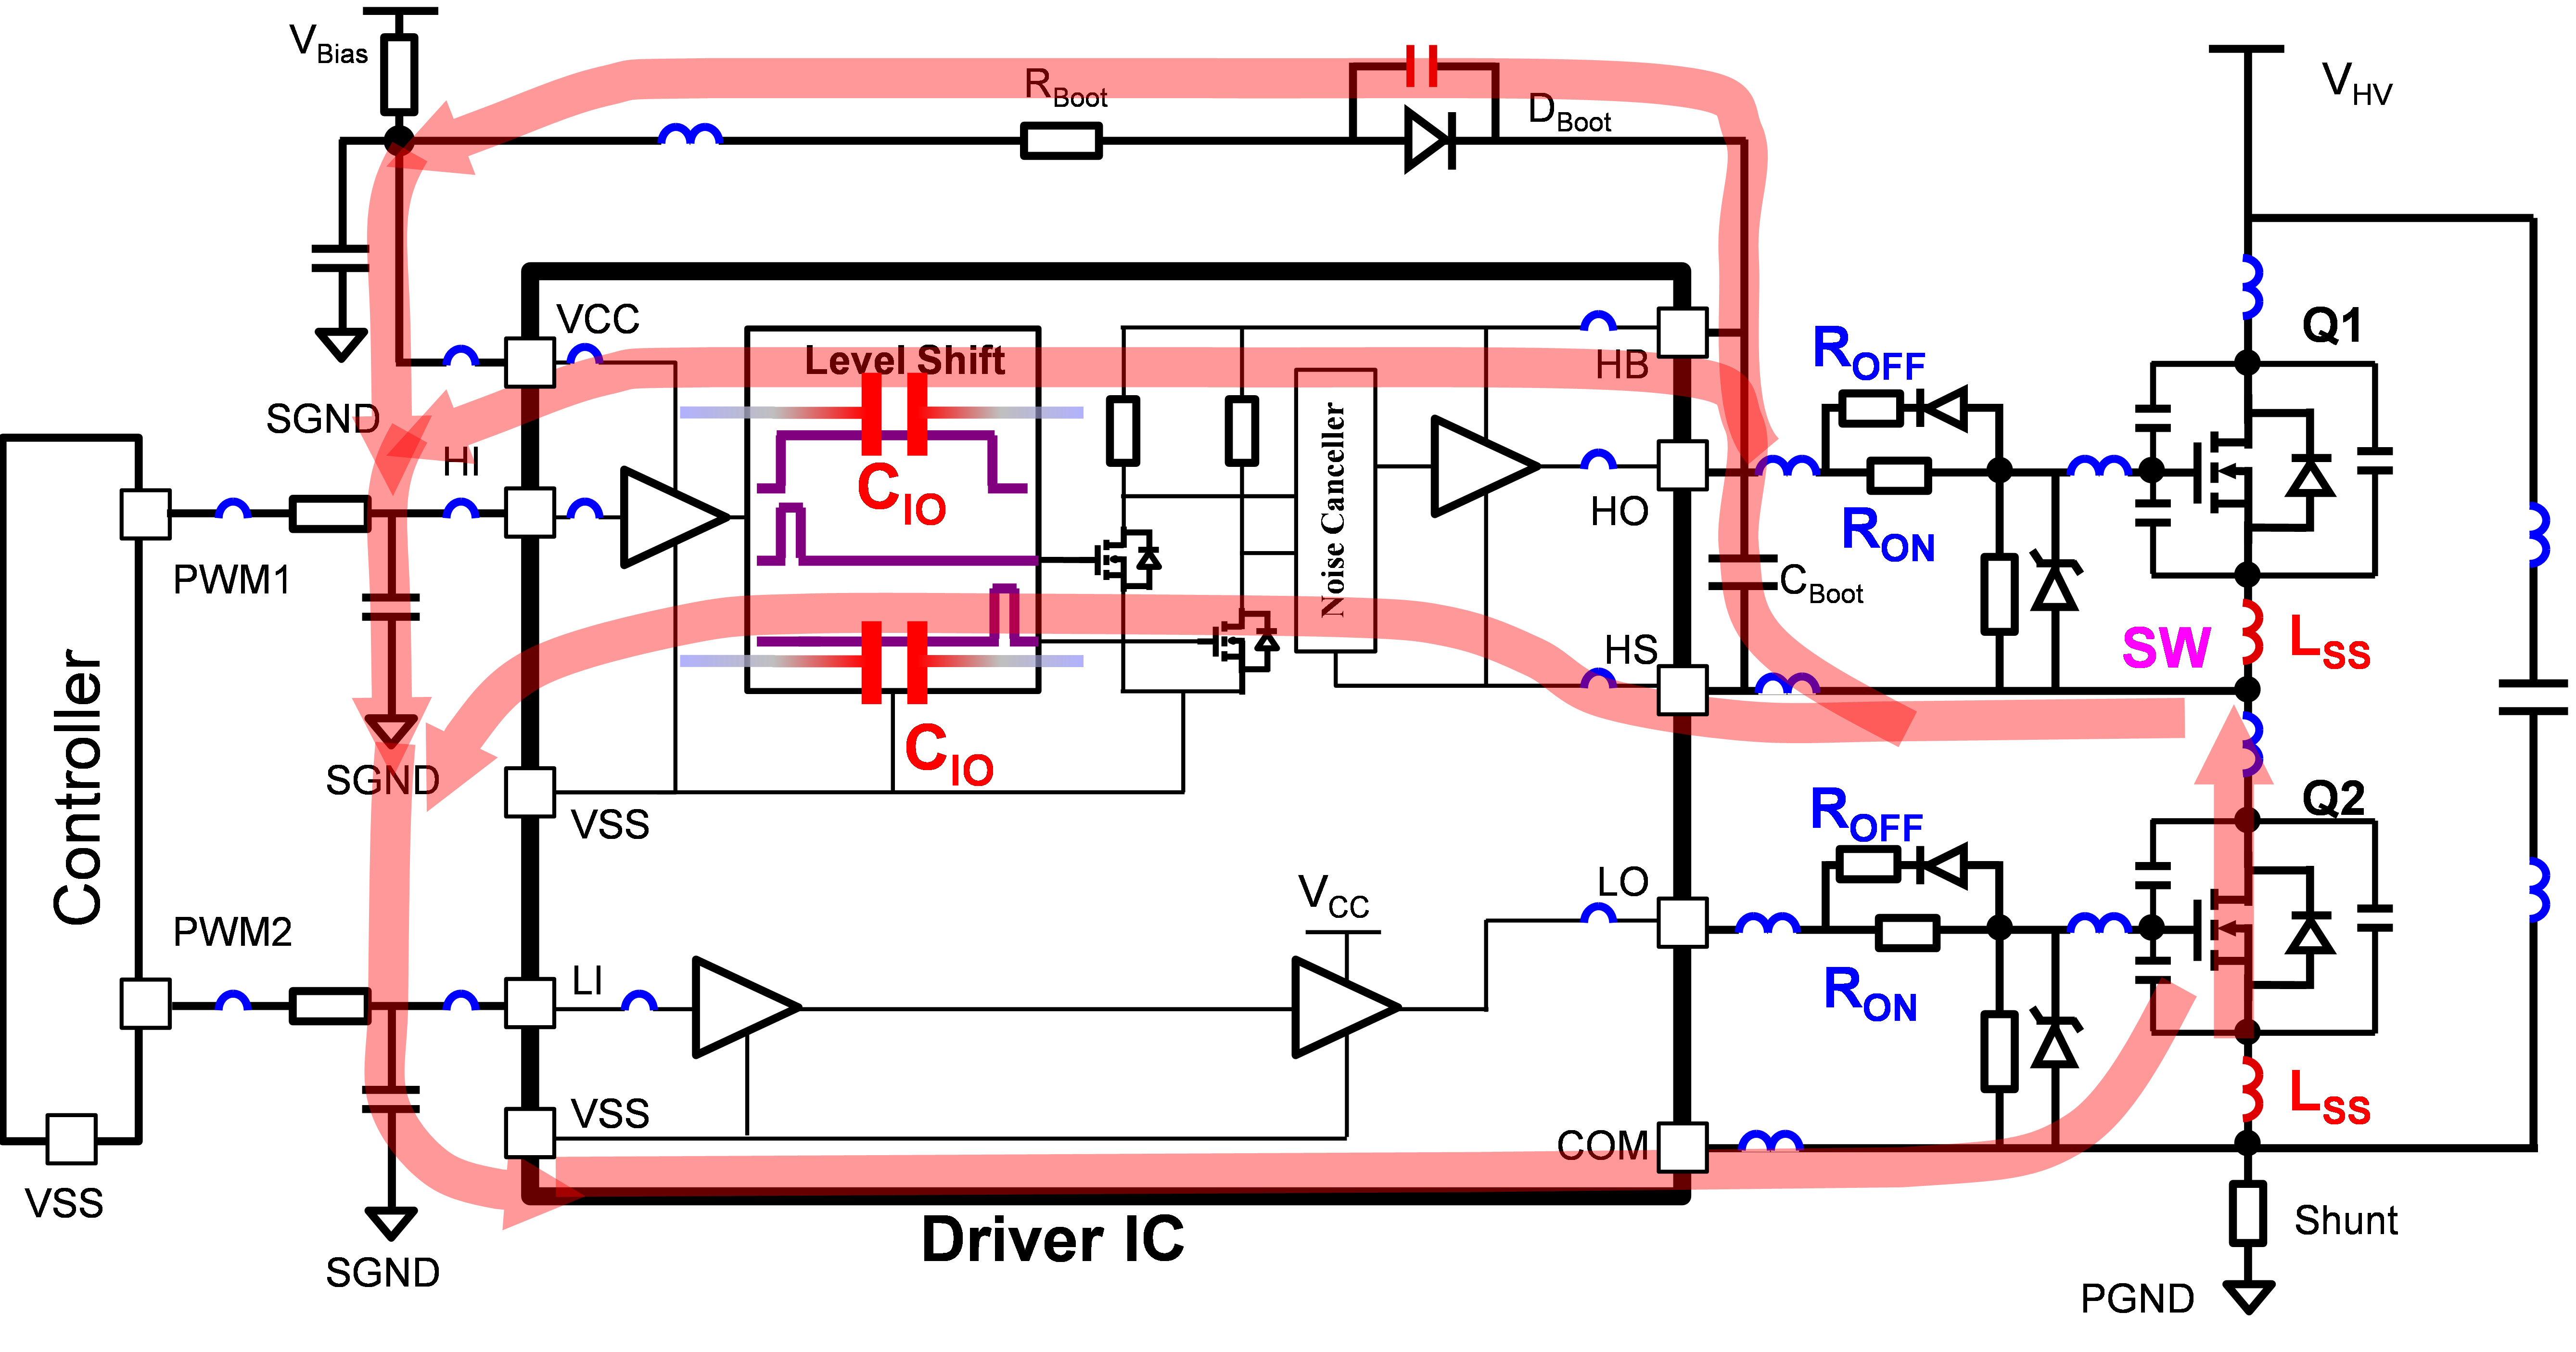 transistor gate driver circuit